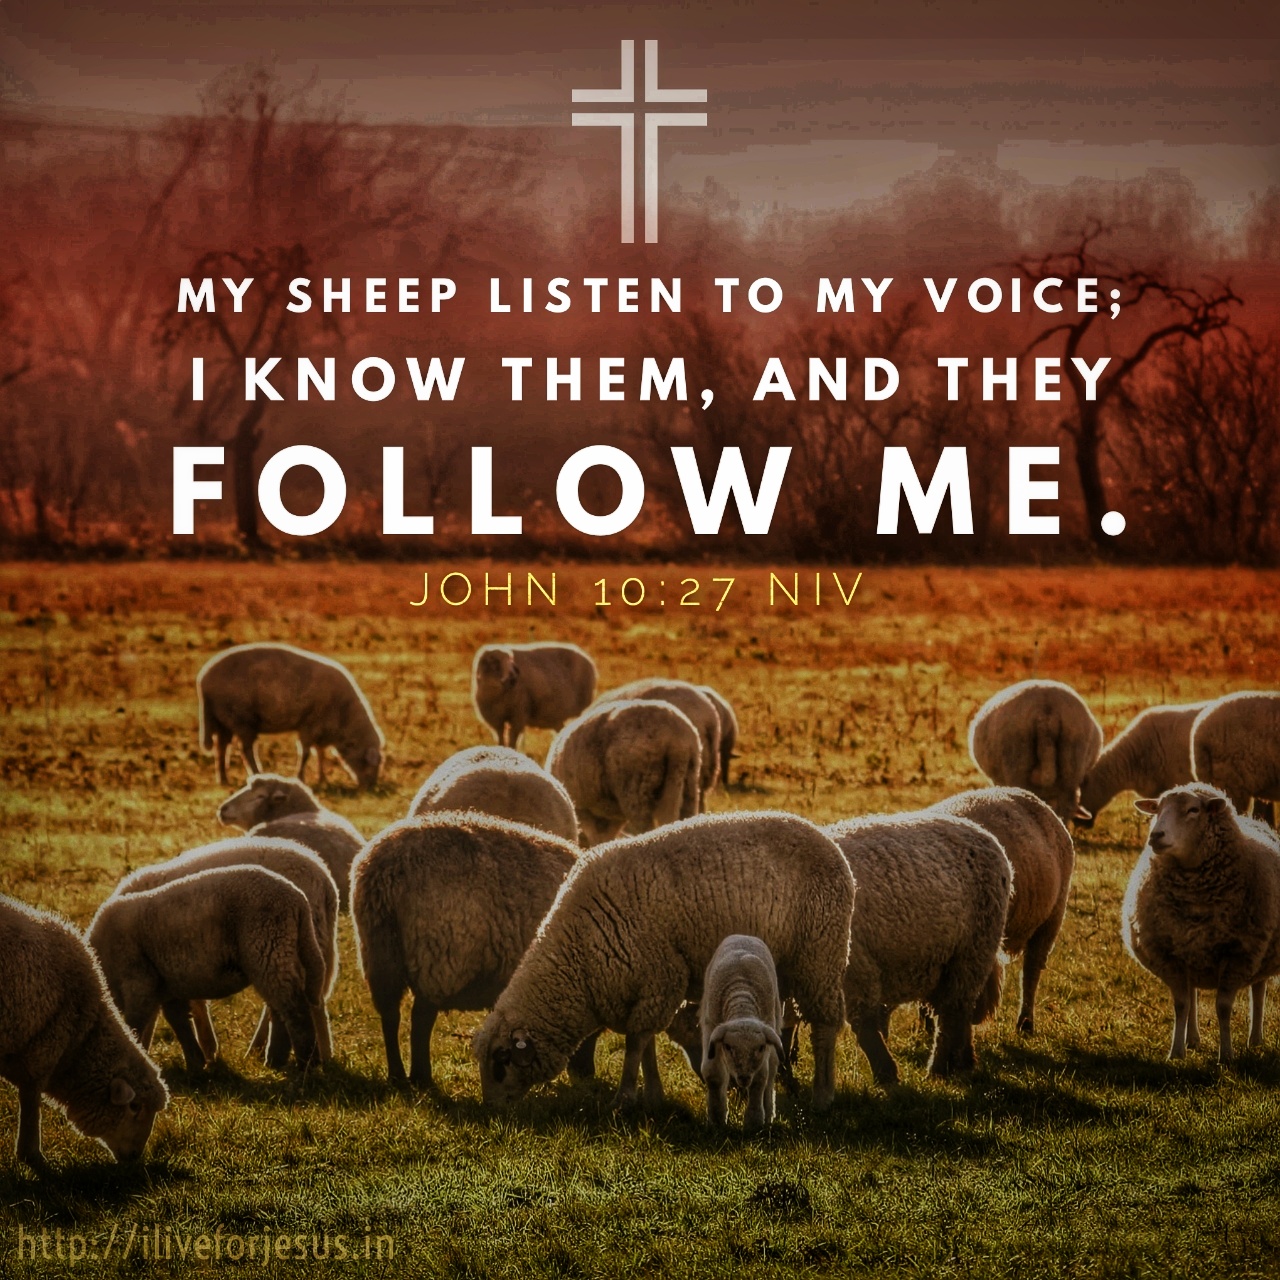 my sheep hear my voice